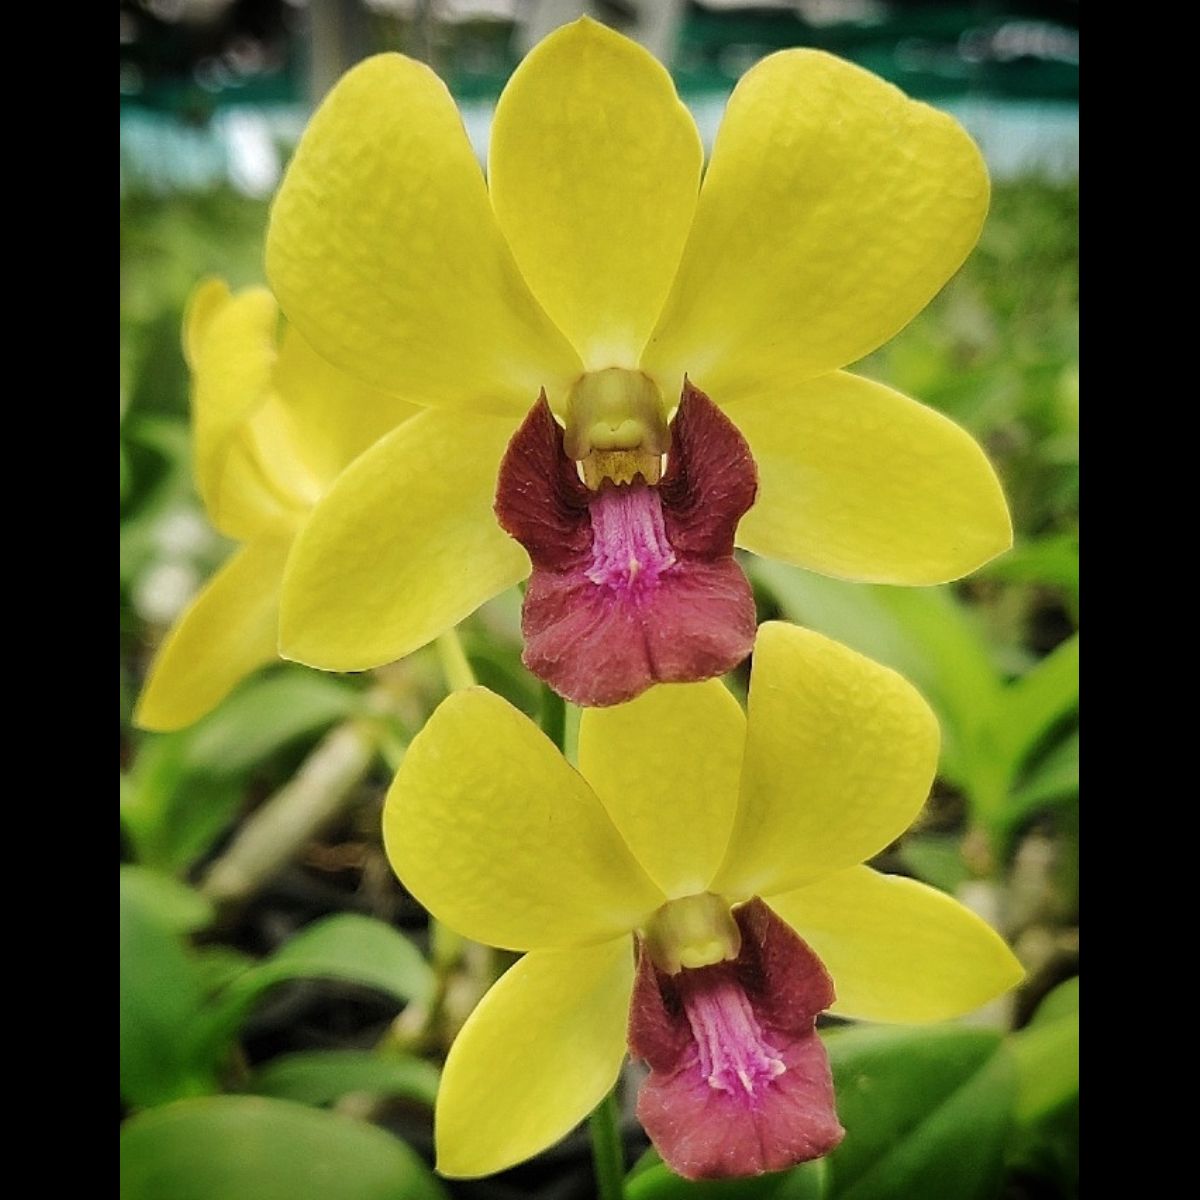 Dendrobium Burana Jade Orchid - Yellow Blooms and Delicate Petals